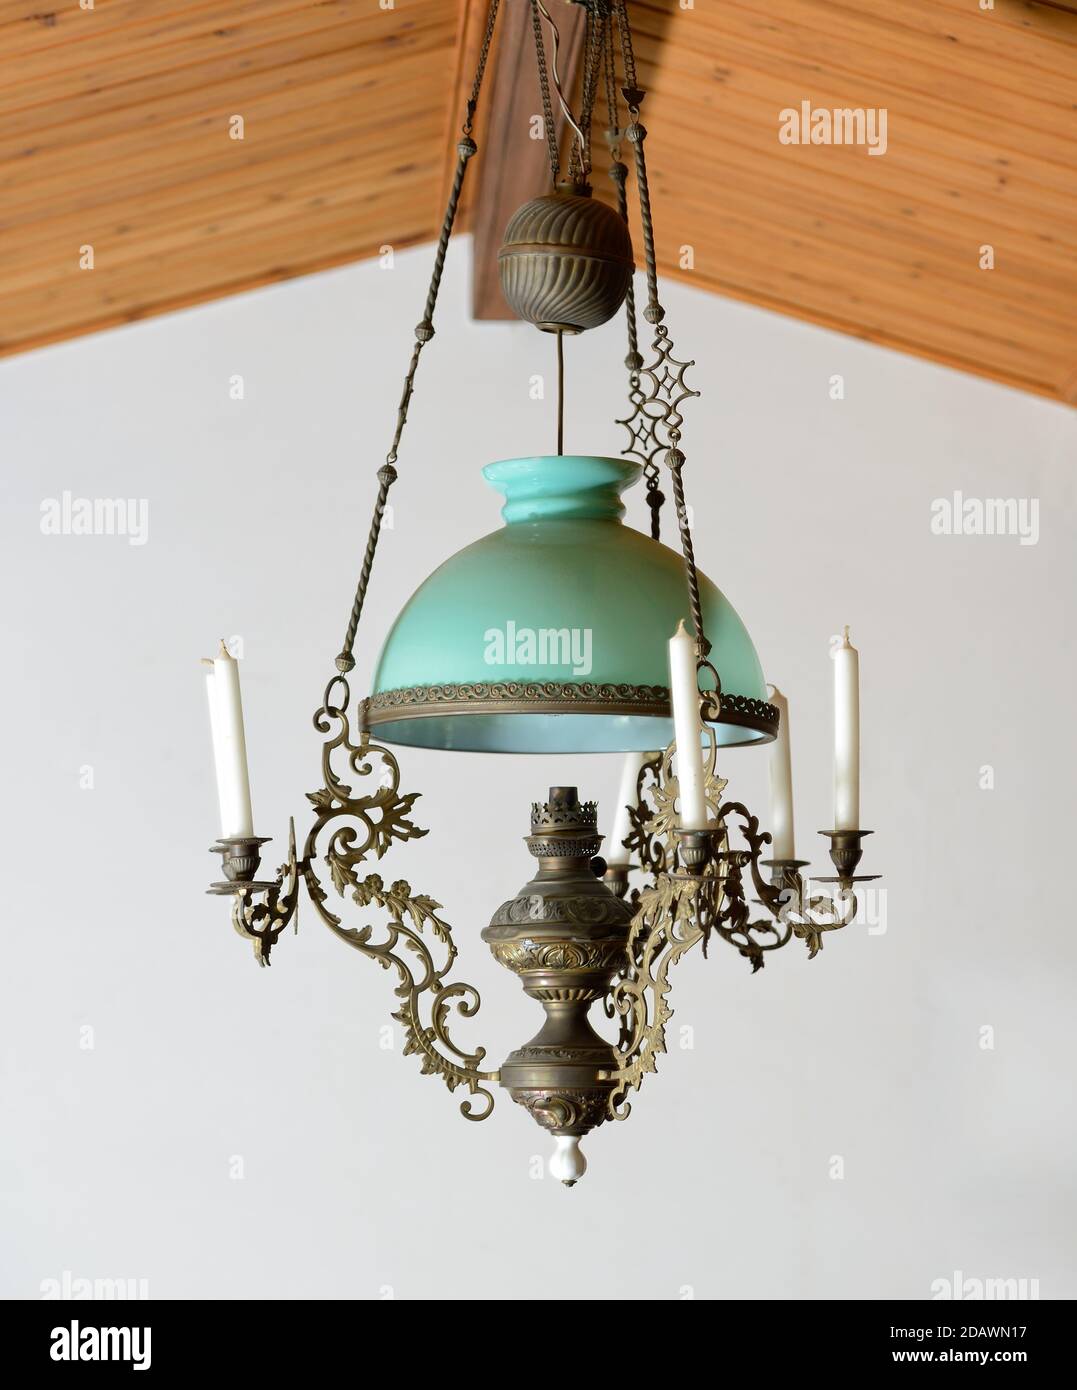 Antiguo techo de madera con lámpara de queroseno colgante antigua con velas  Fotografía de stock - Alamy